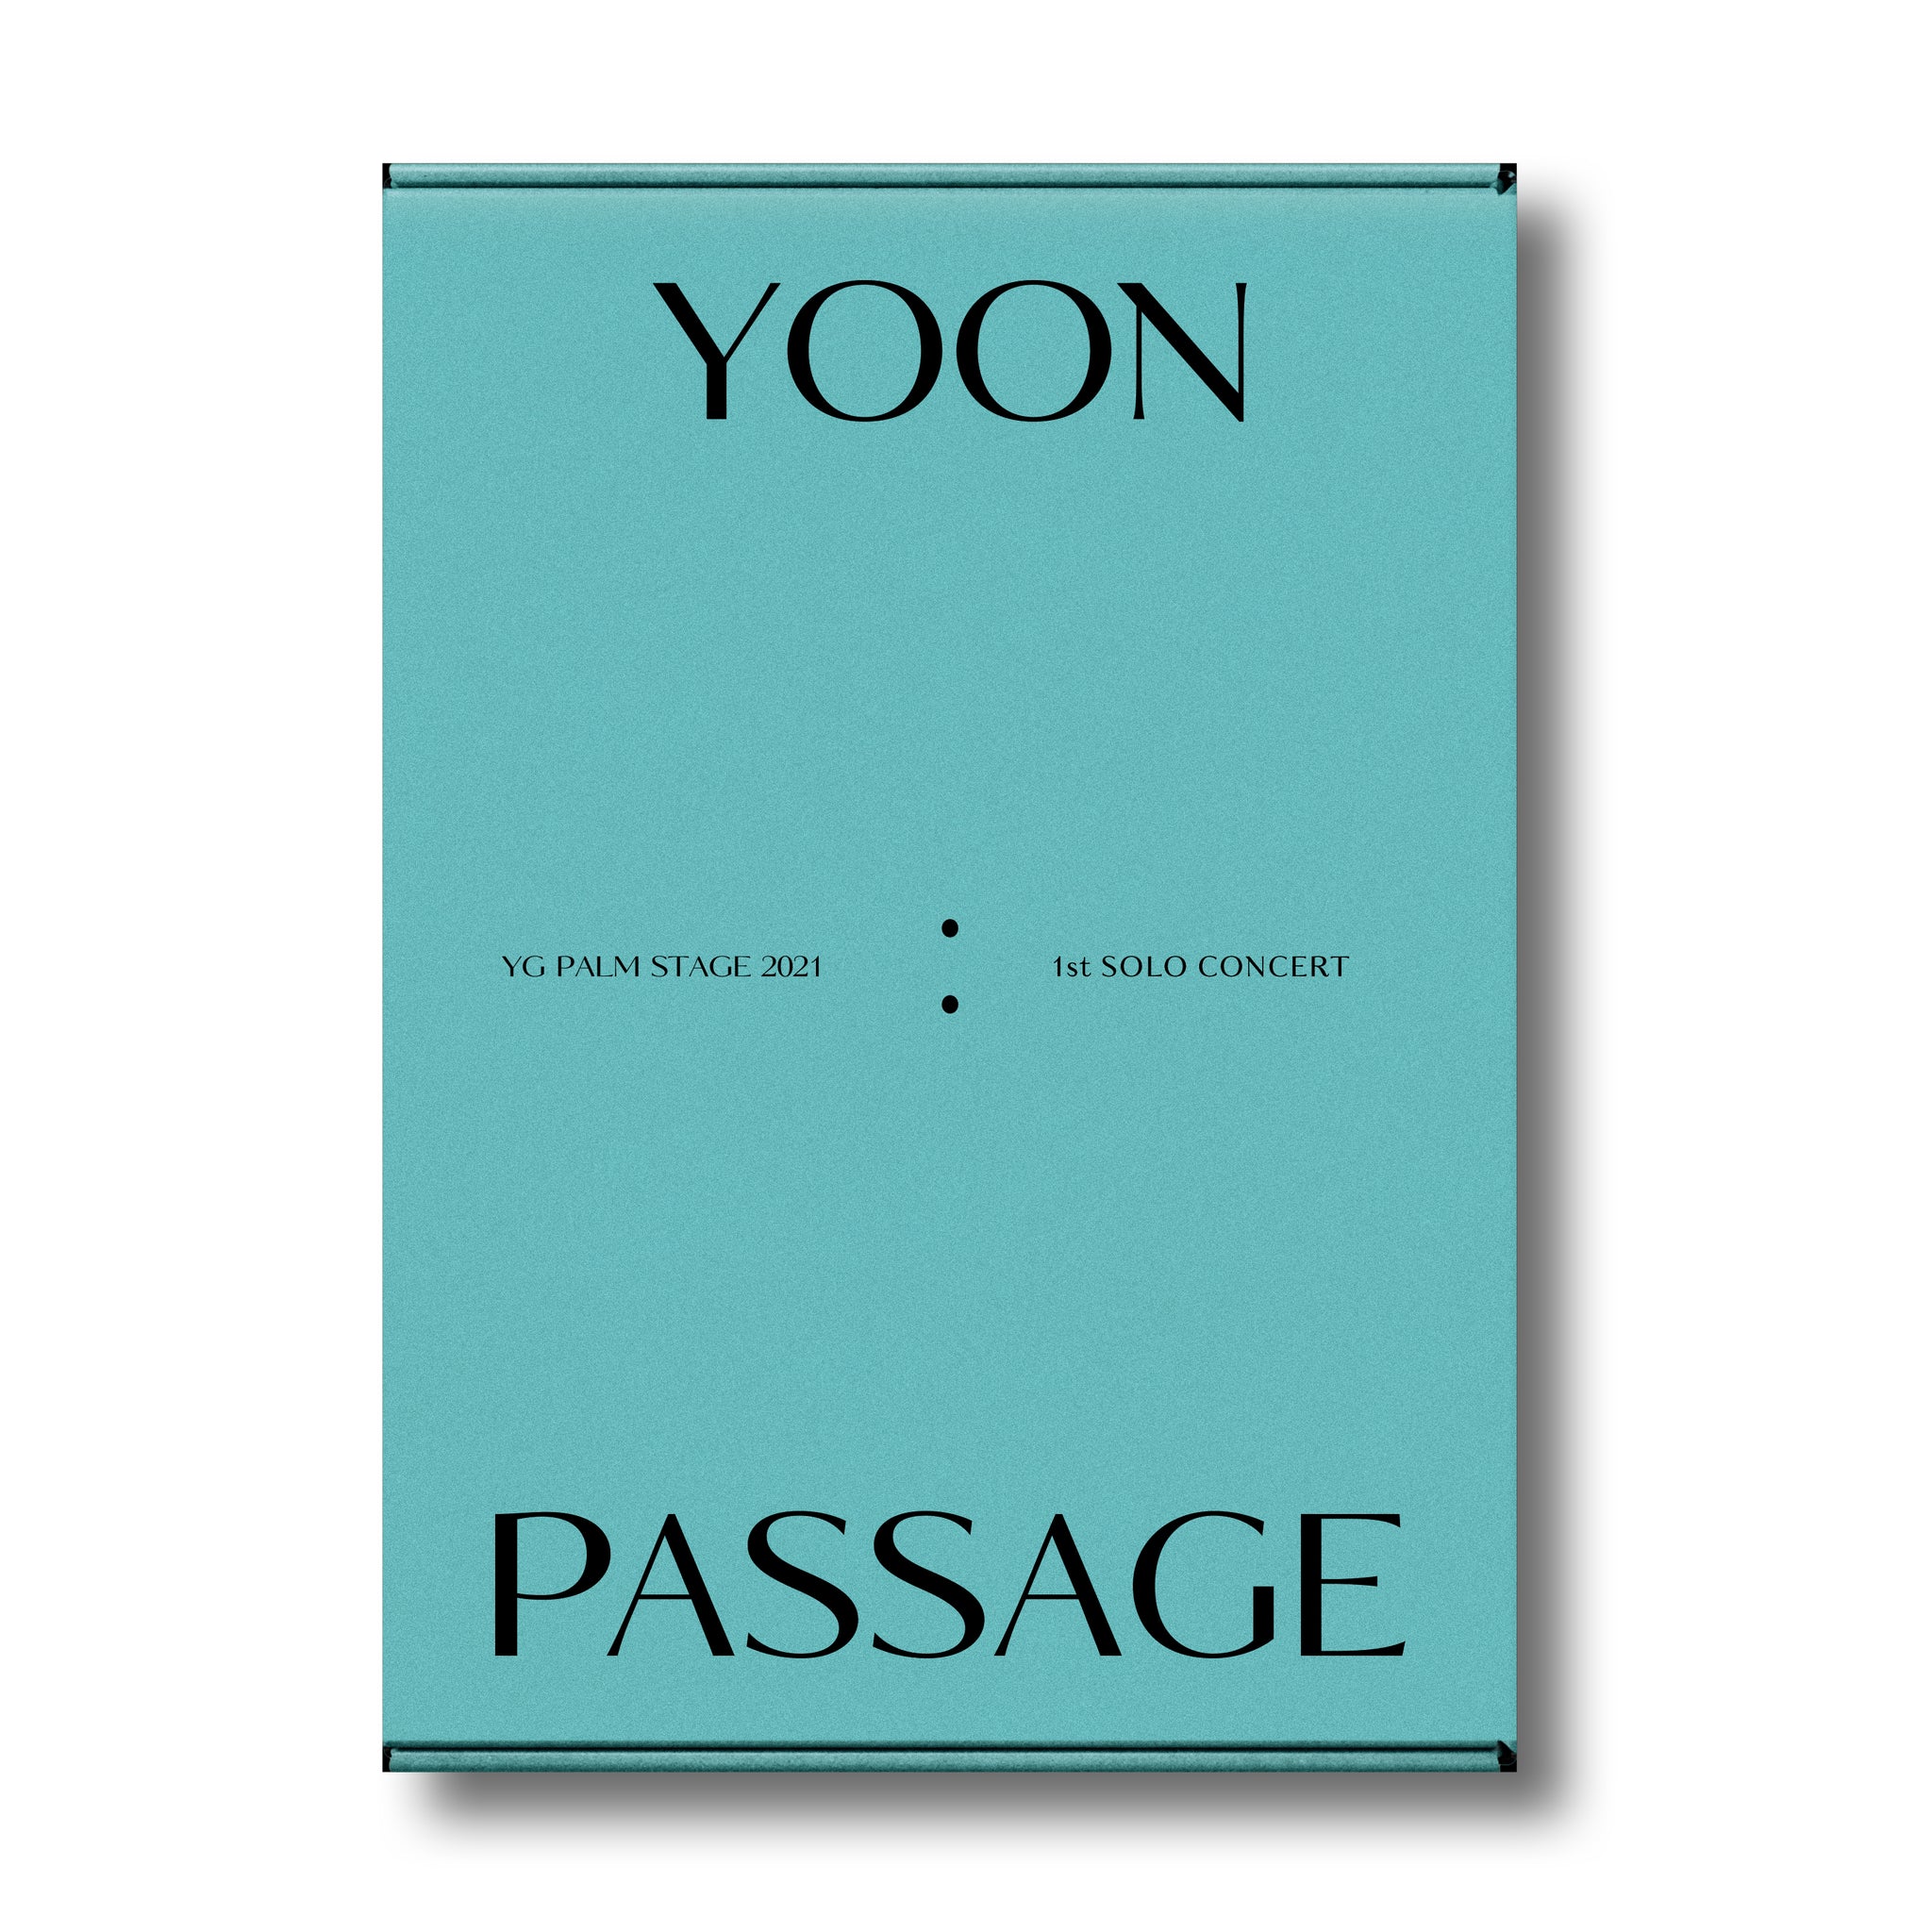 KANG SEUNG YOON (WINNER) YG PALM STAGE 2021 'YOON : PASSAGE' KHINO KIT VIDEO COVER